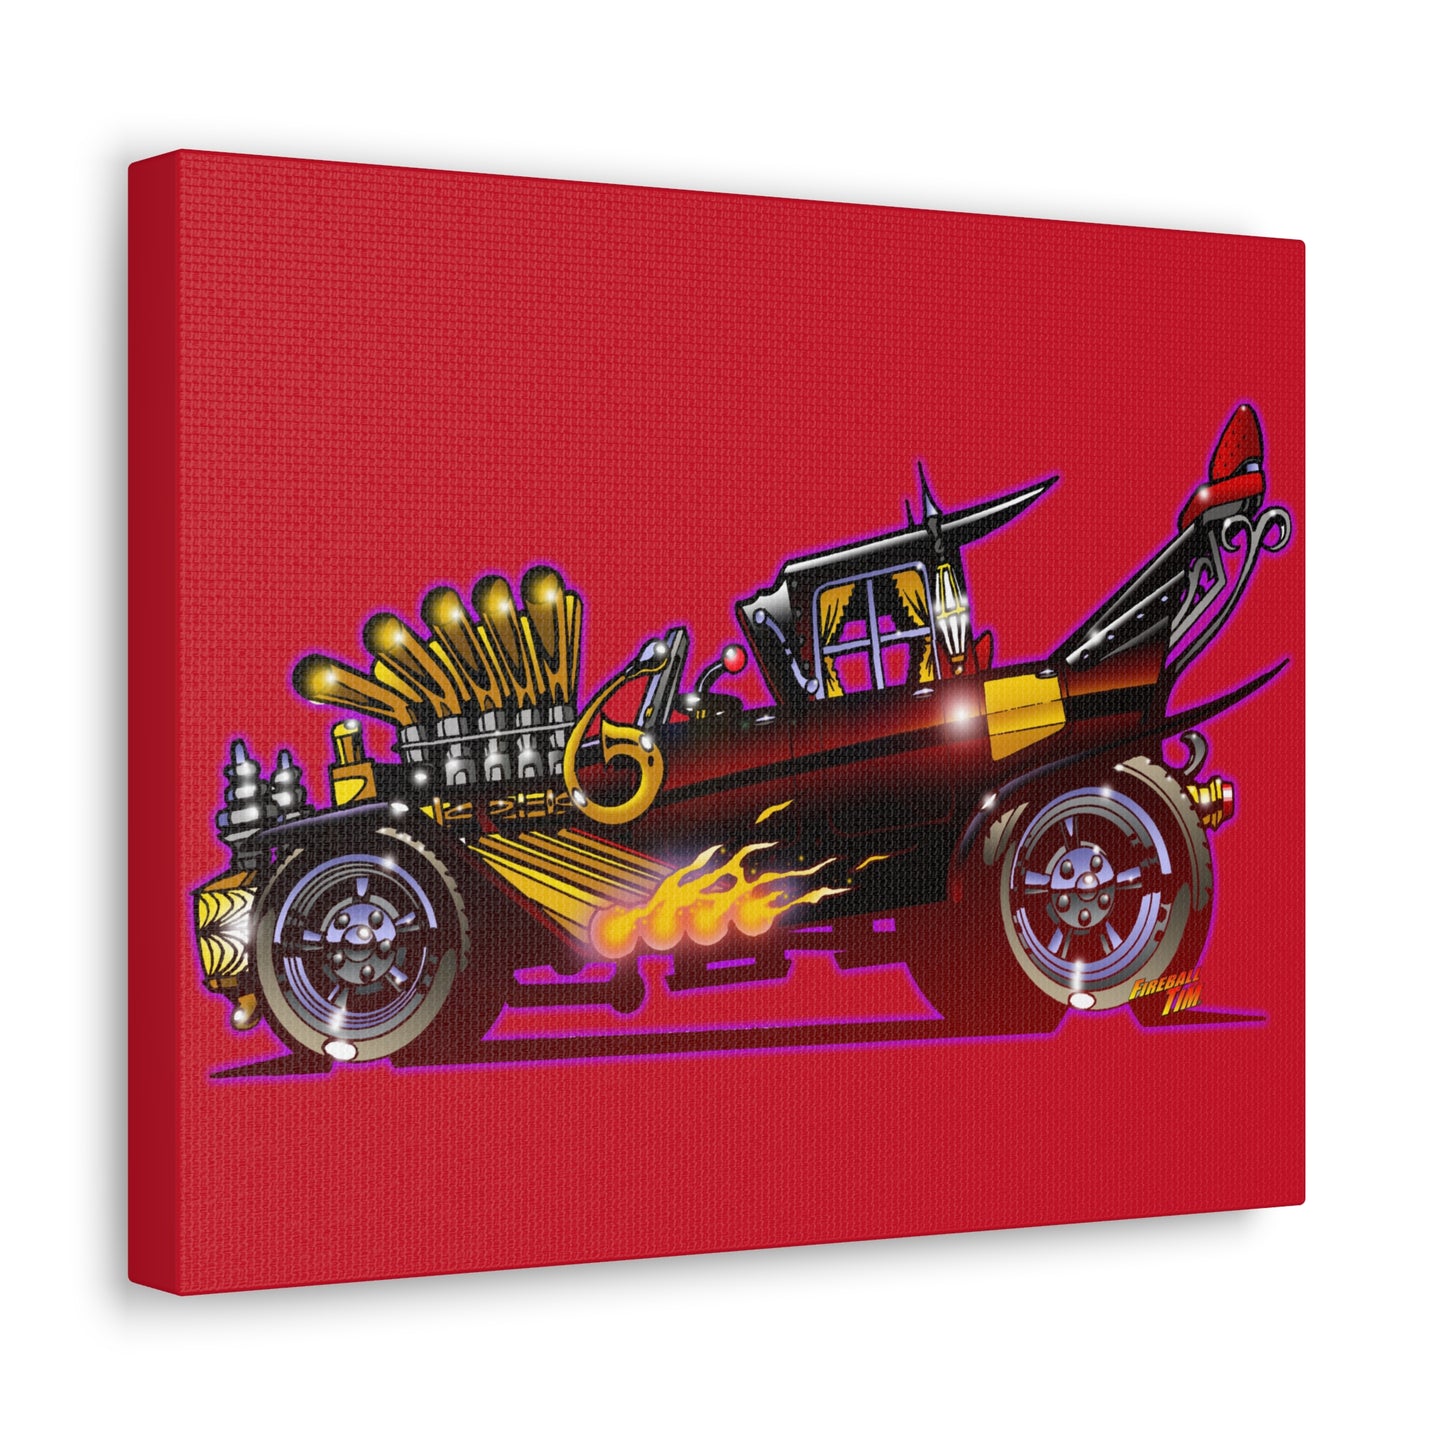 MUNSTERS KOACH TV Car Canvas Gallery Art Print 11x14